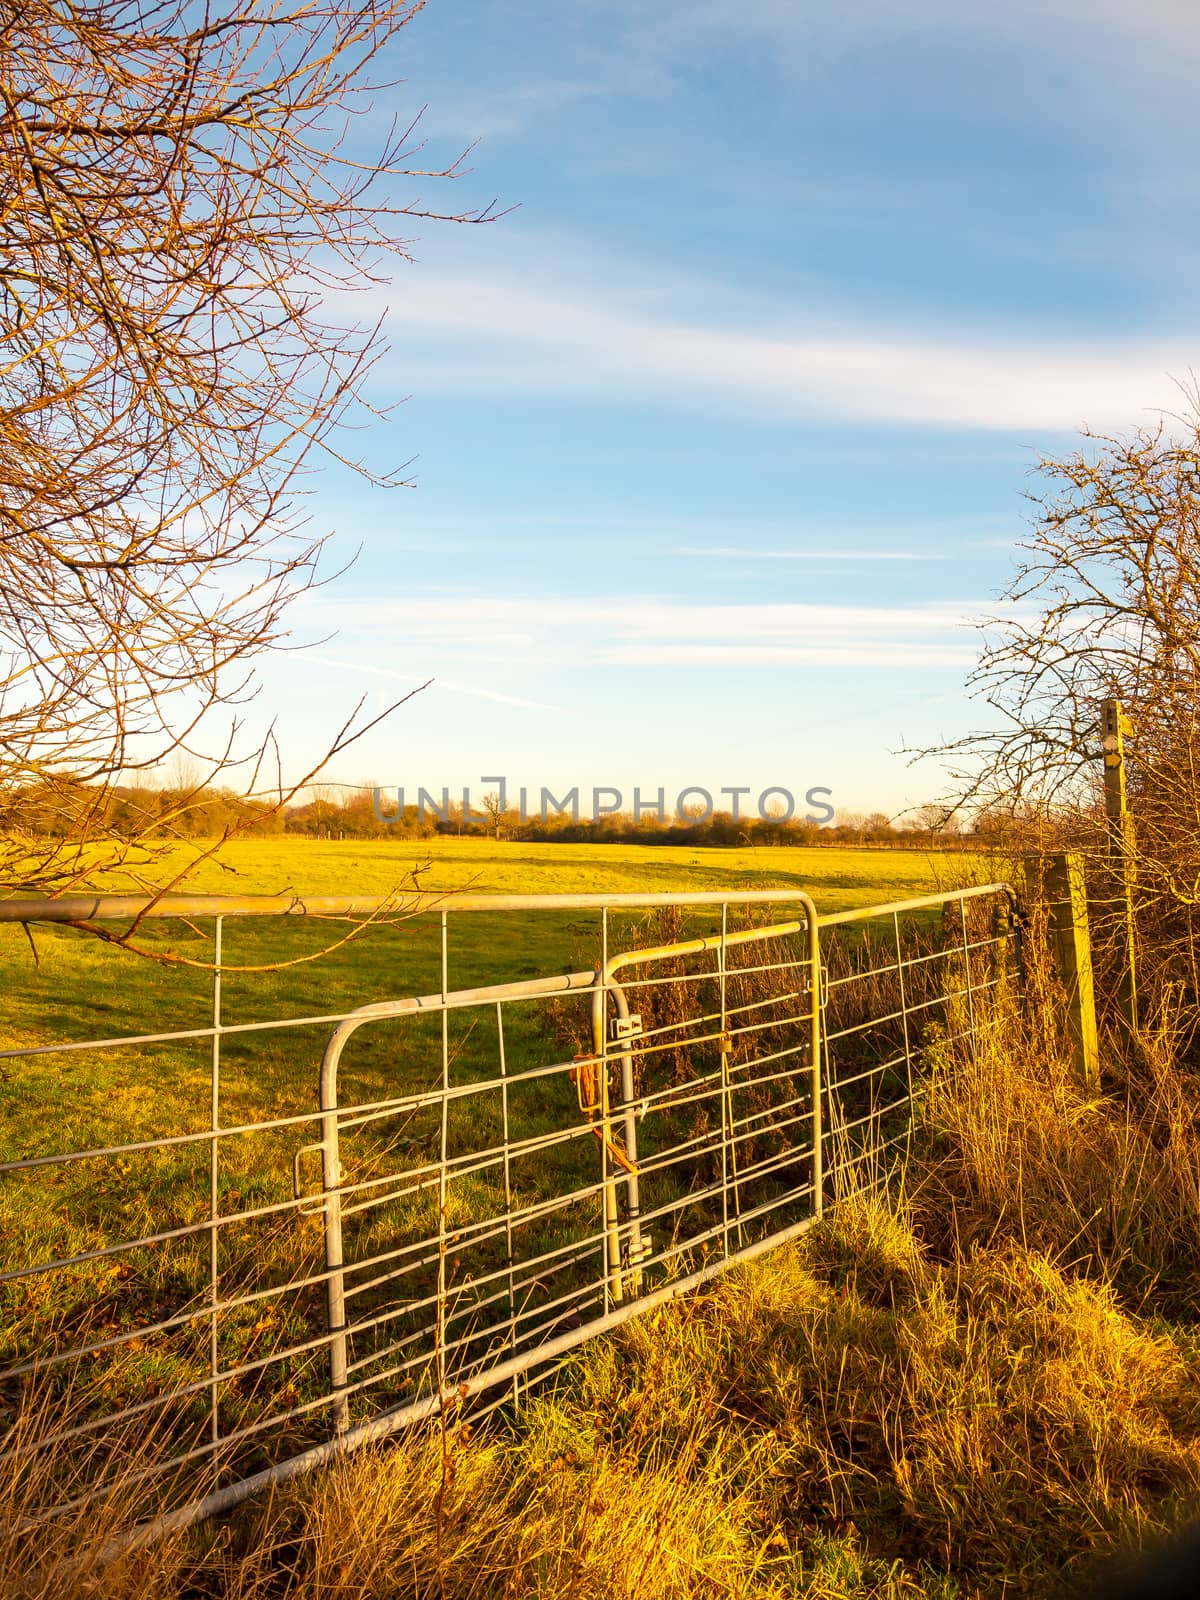 farmland metal farm gate field closed locked agriculture nature landscape confined; essex; england; uk